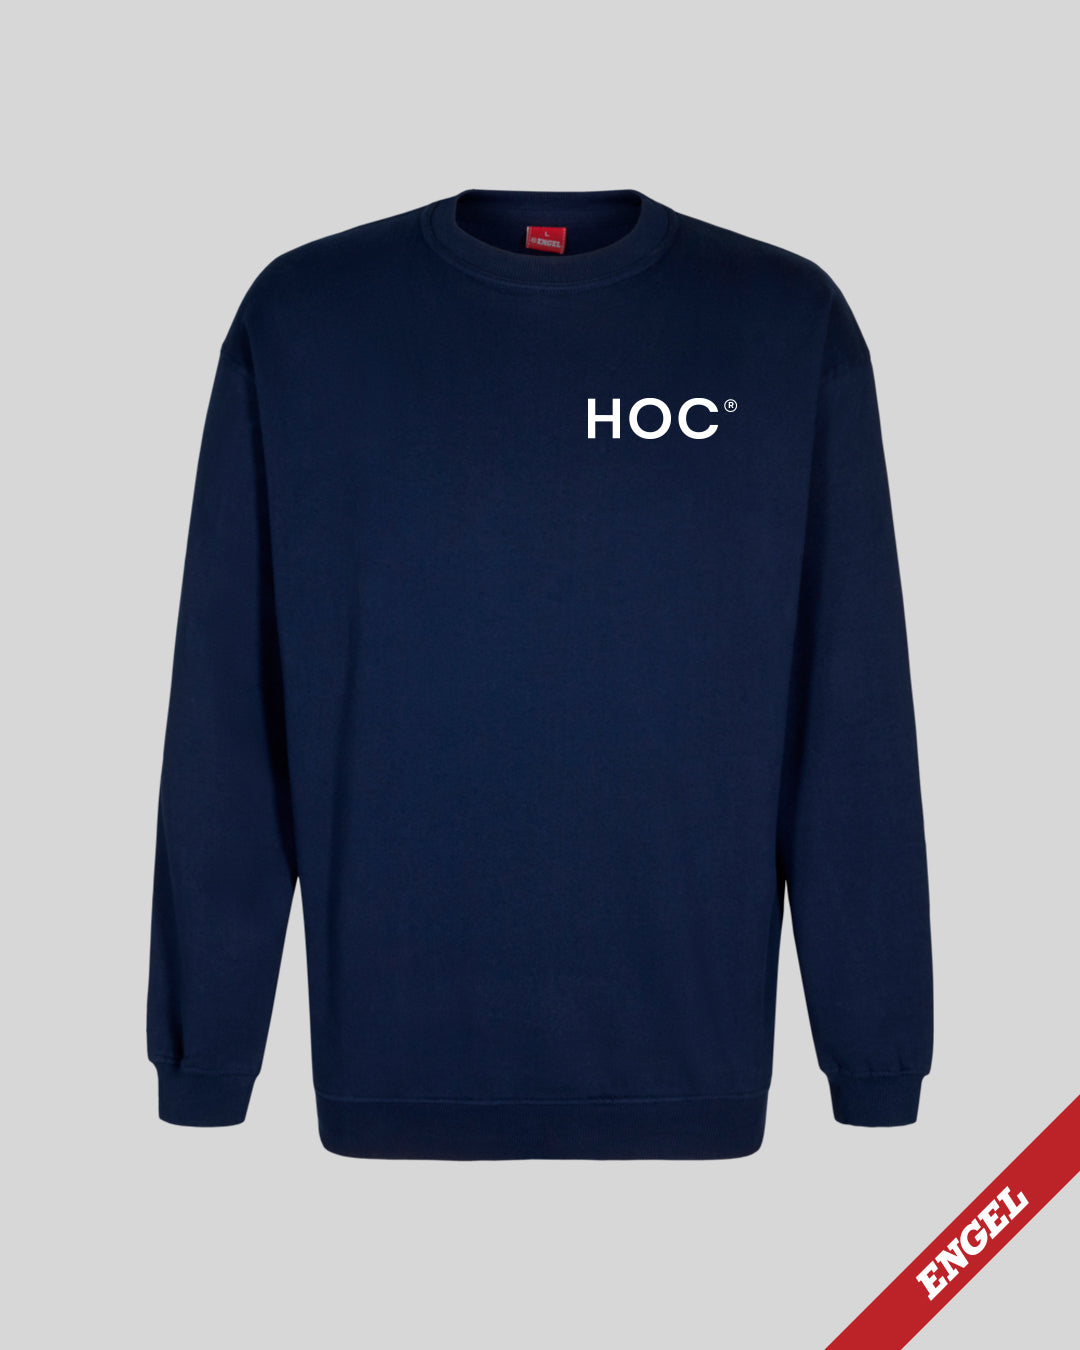 HOC sweatshirt - Rally Blue